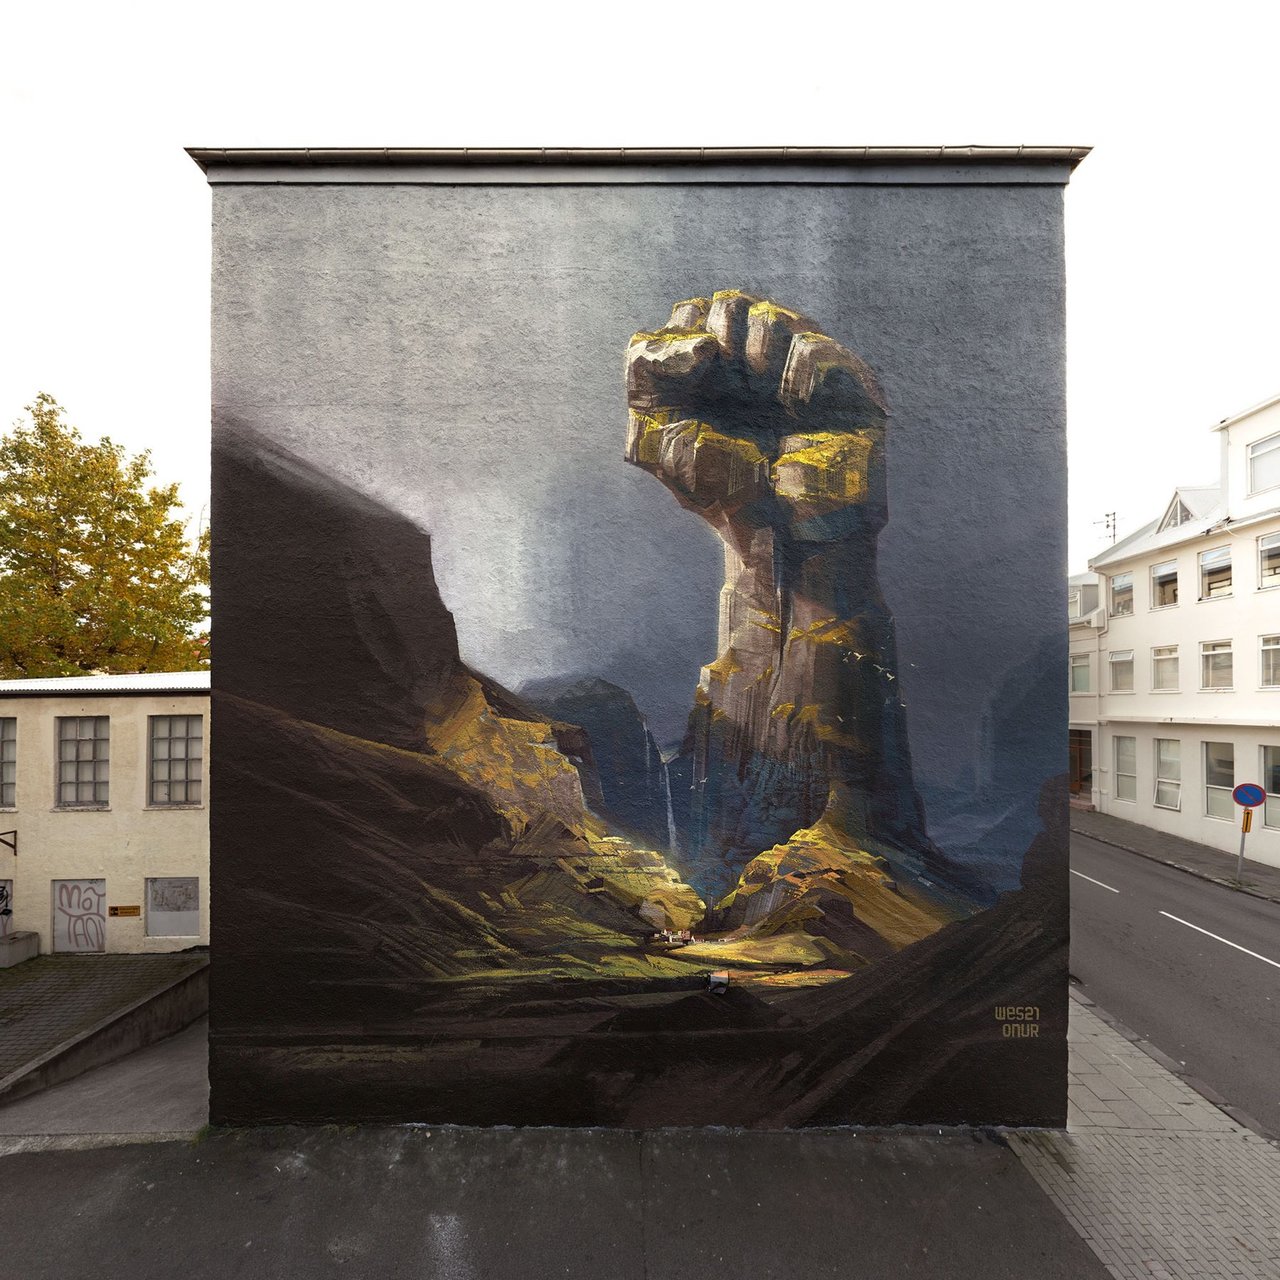 Wall Poetry ’16: “Heavy Stones Fear No Weather” by Onur & Wes21 in Reykjavik #streetart https://streetartnews.net/2016/10/wall-poetry-16-heavy-stones-fear-no-weather-by-onur-wes21-in-reykjavik.html https://t.co/lhZYjZS2He